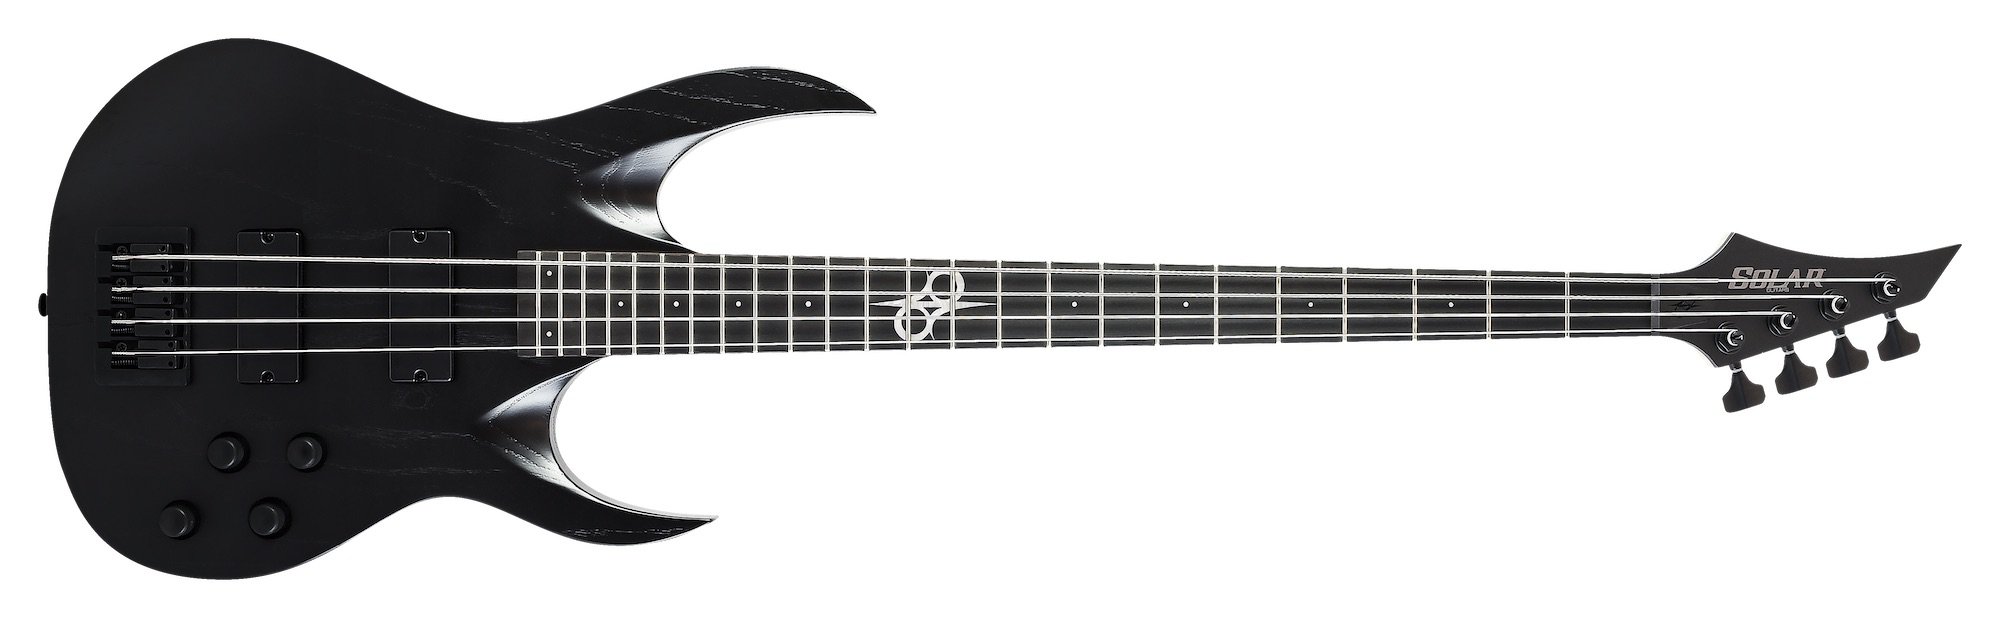 Mer information om "SOLAR GUITARS Announces Its First Line of Bass Guitars"